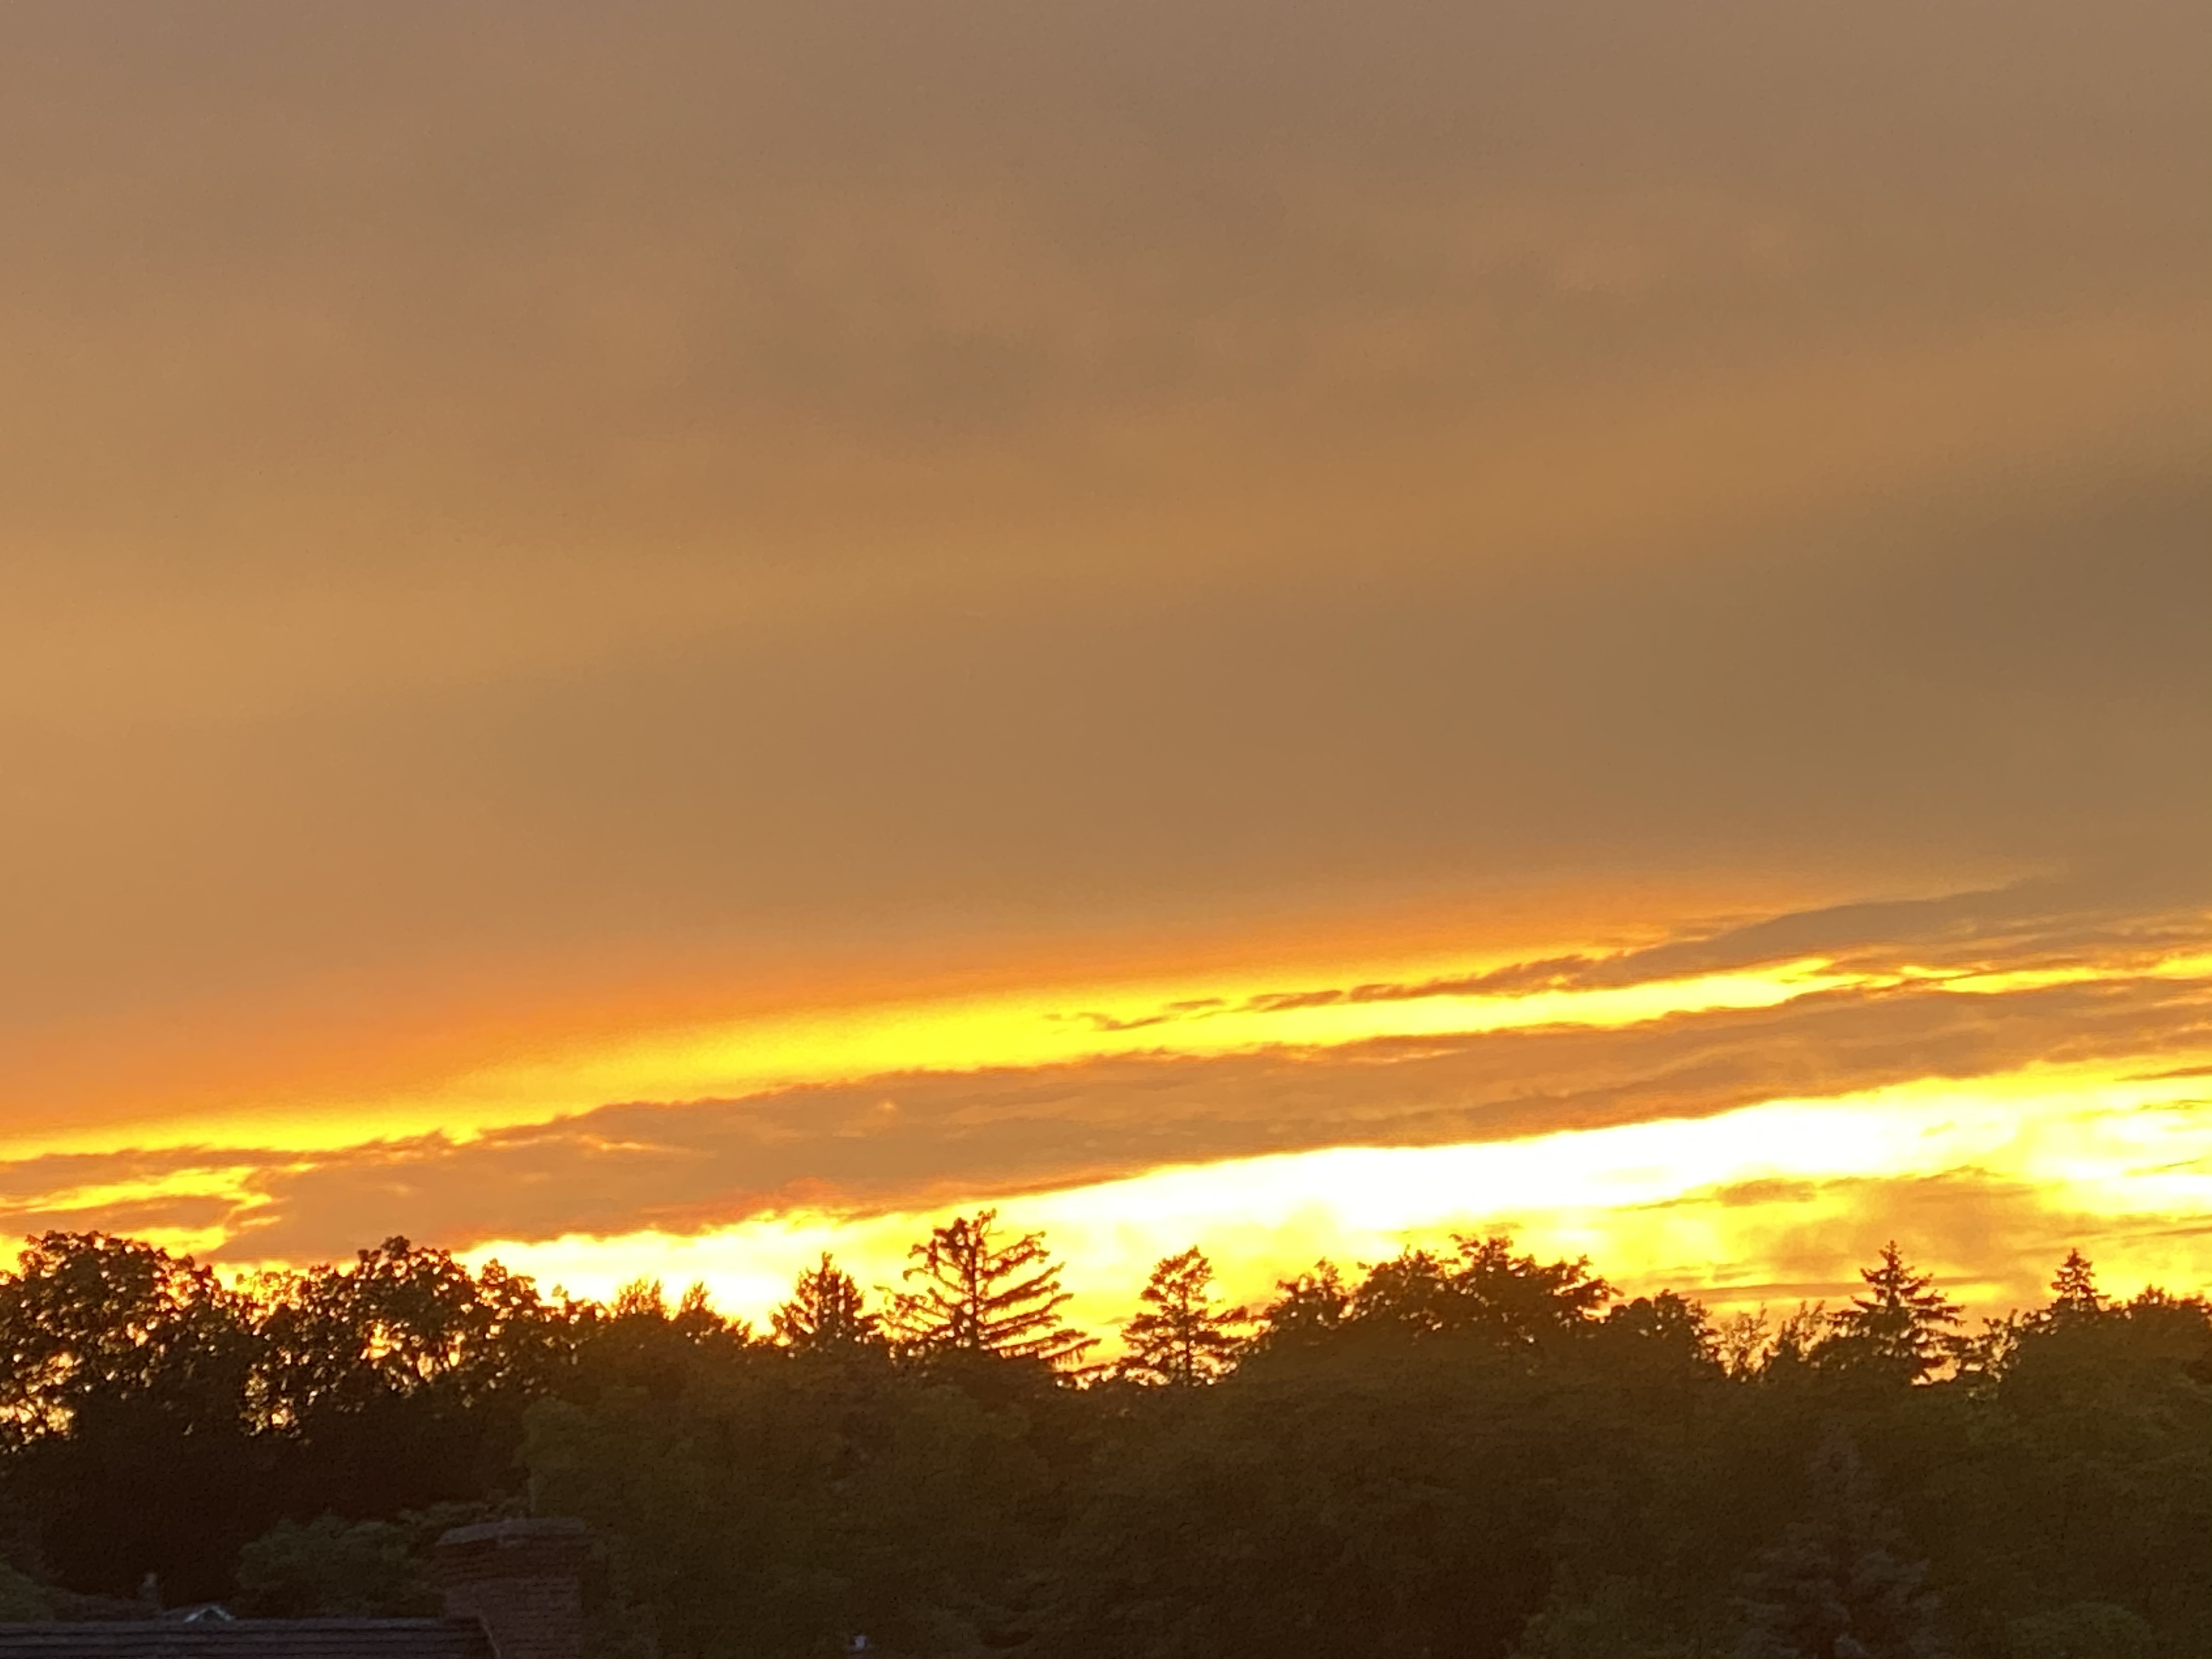 Obituary sunset scene